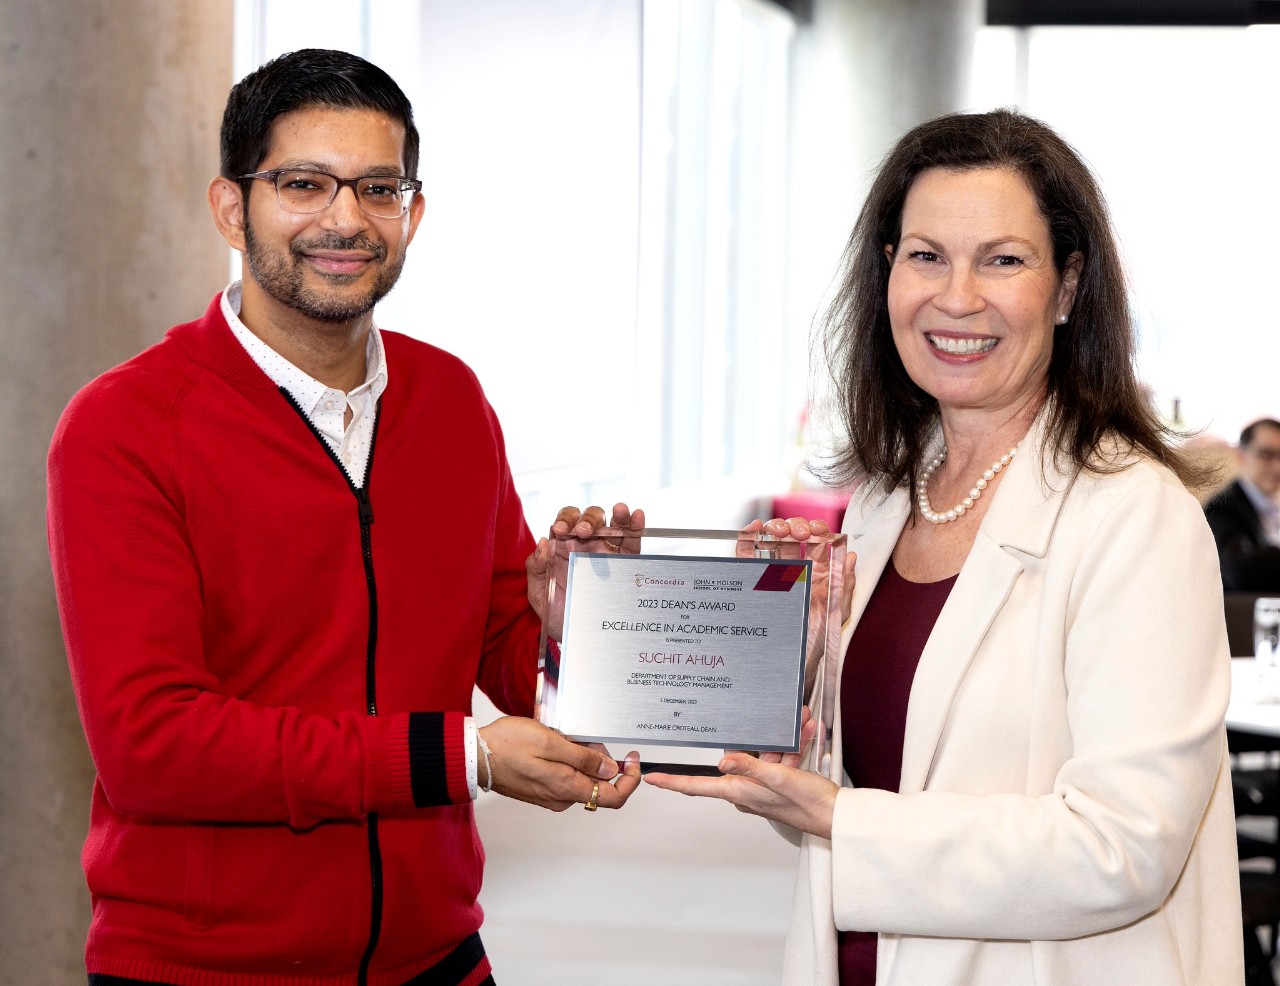 Suchit Ahuja accepts his award for Academic Service alongside Dean Anne-Marie Croteau